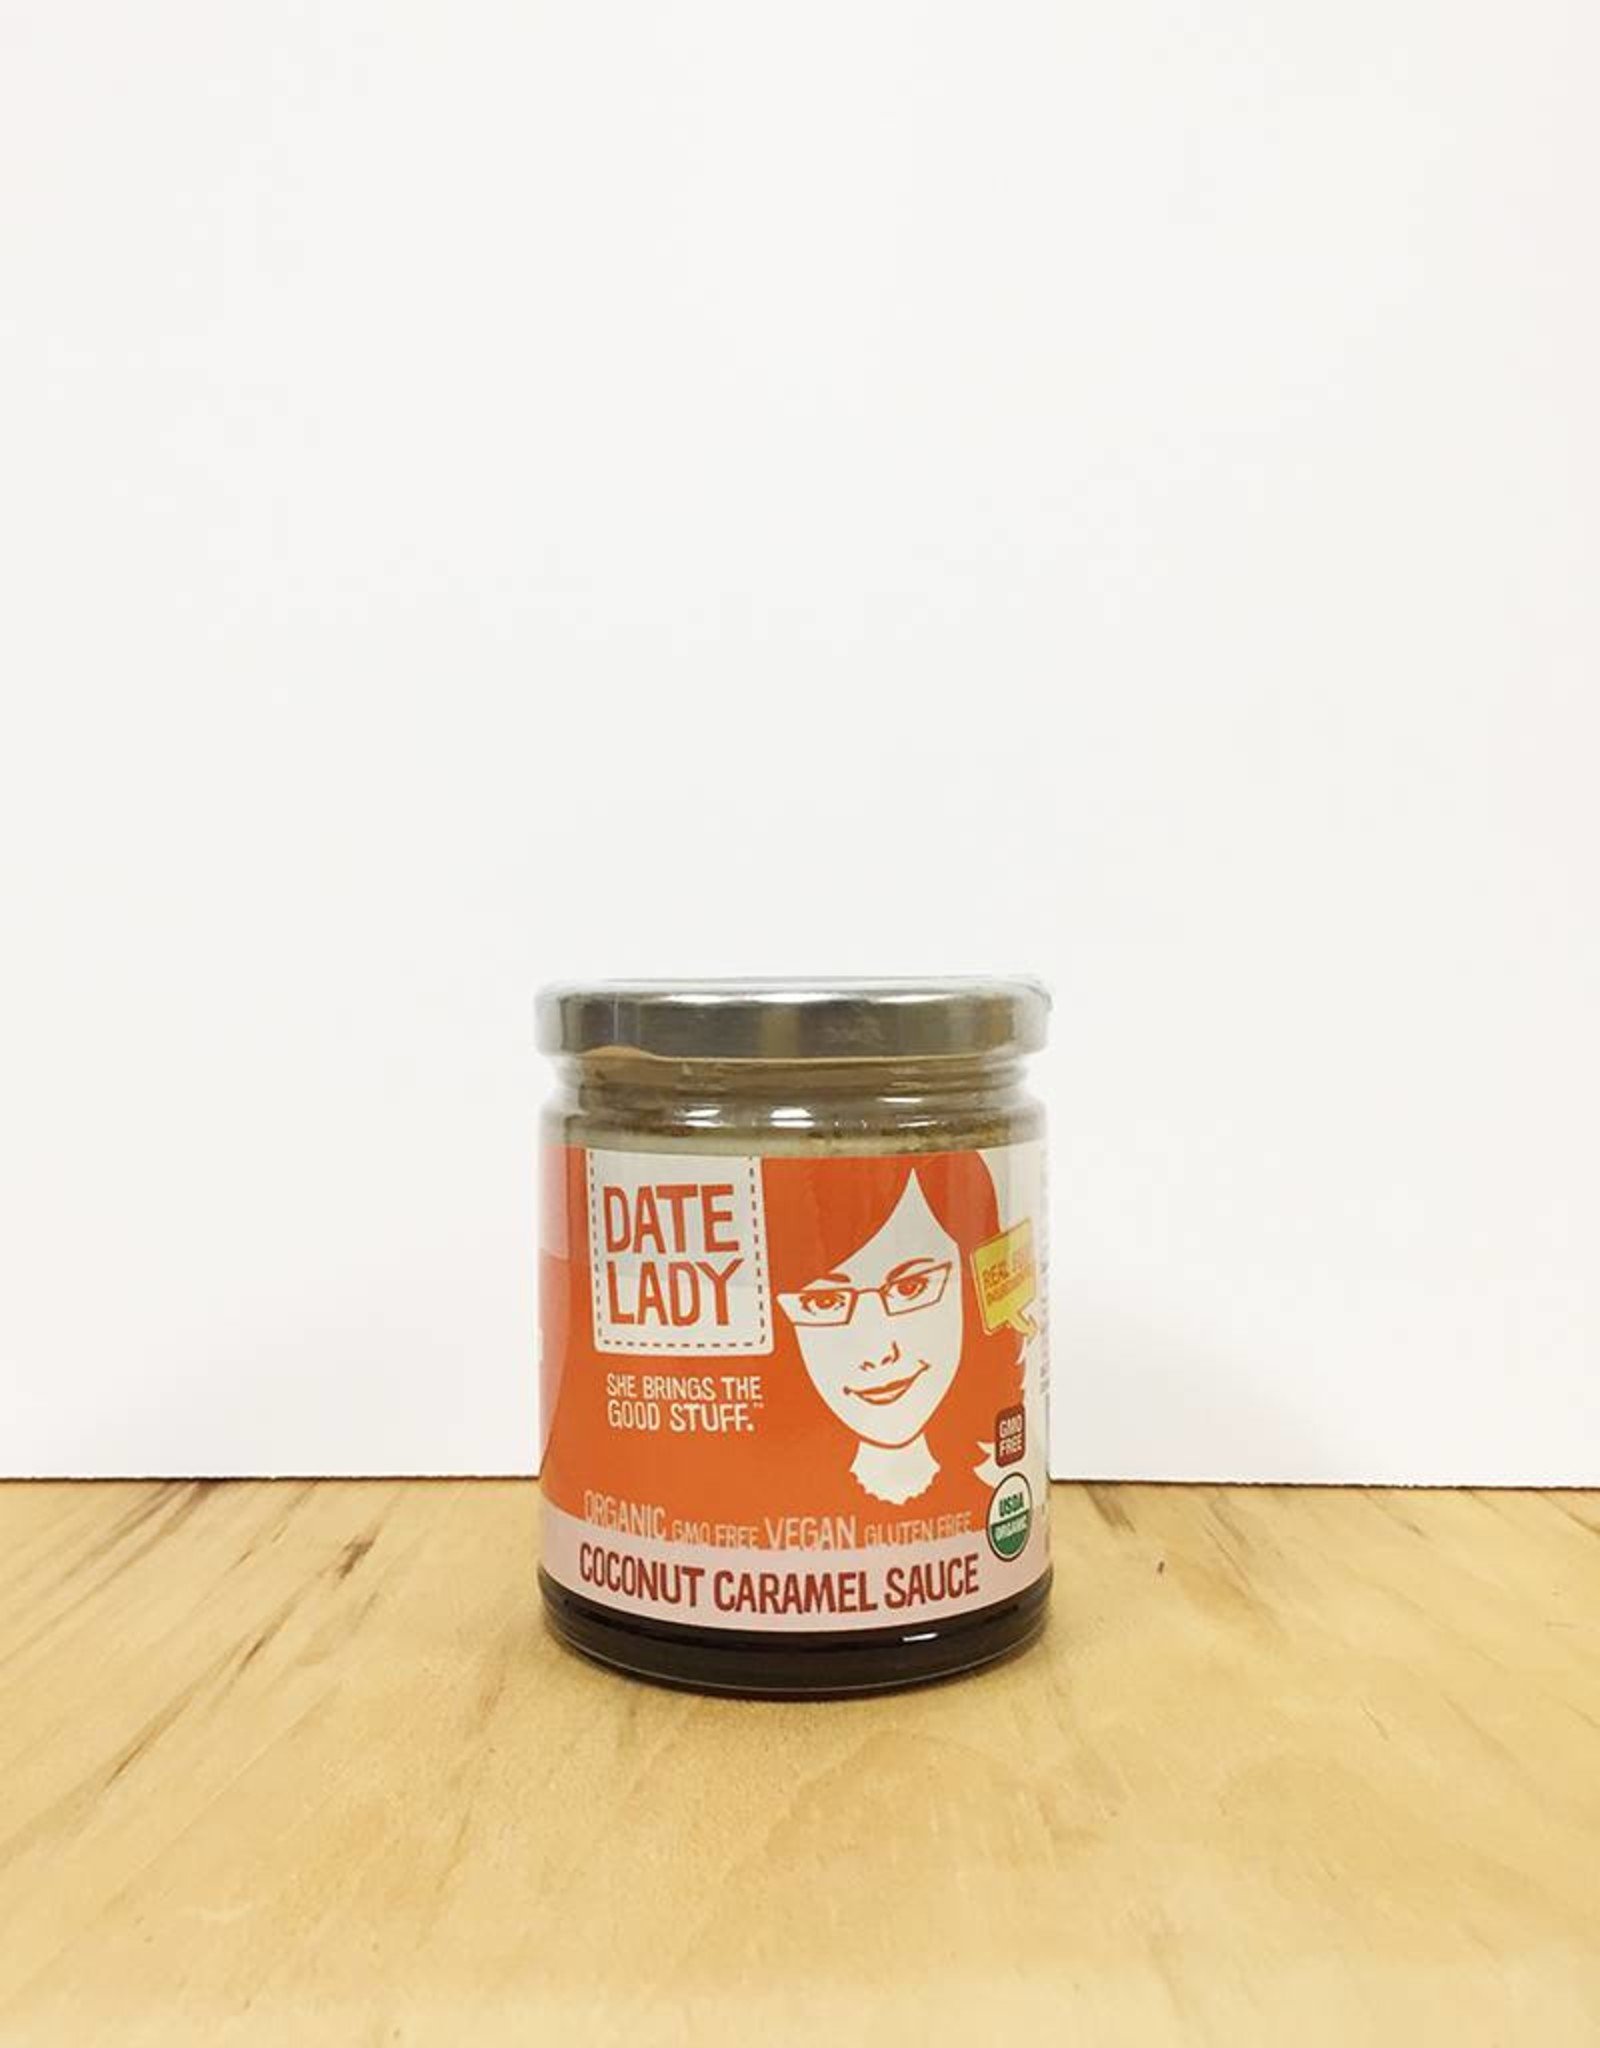 Date Lady Date Lady Coconut Caramel Sauce